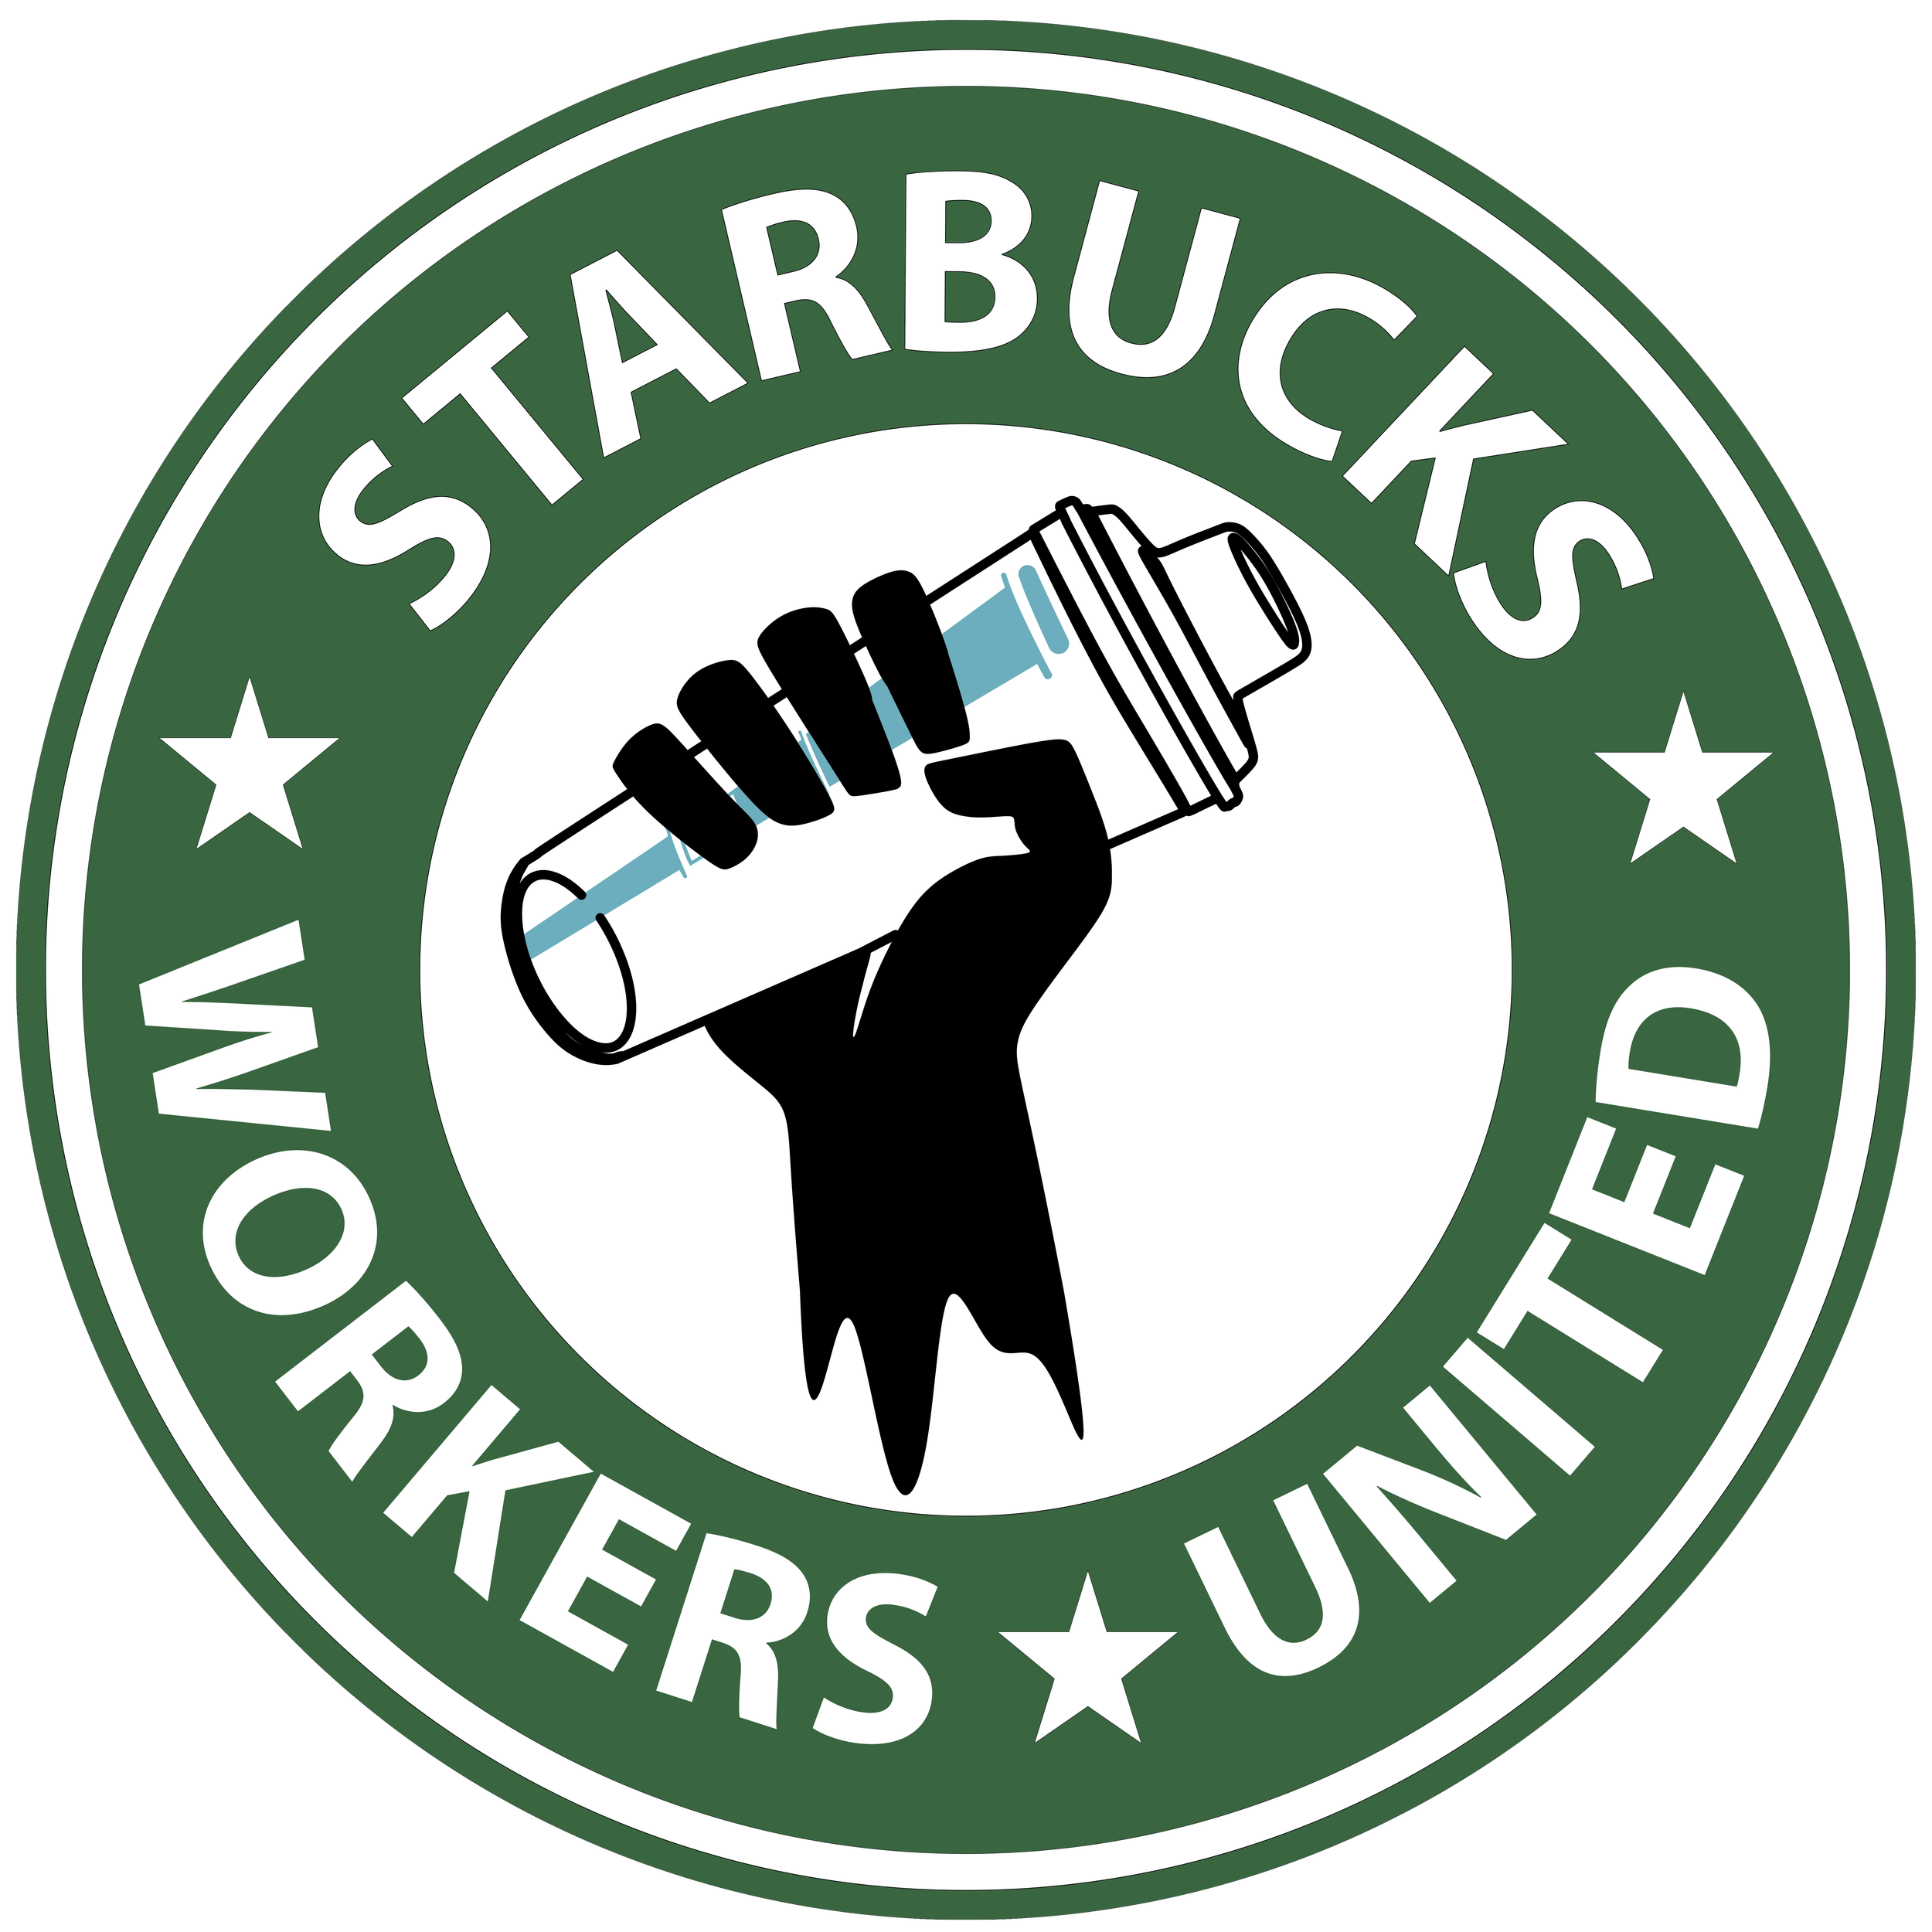 Starbucks Workers United